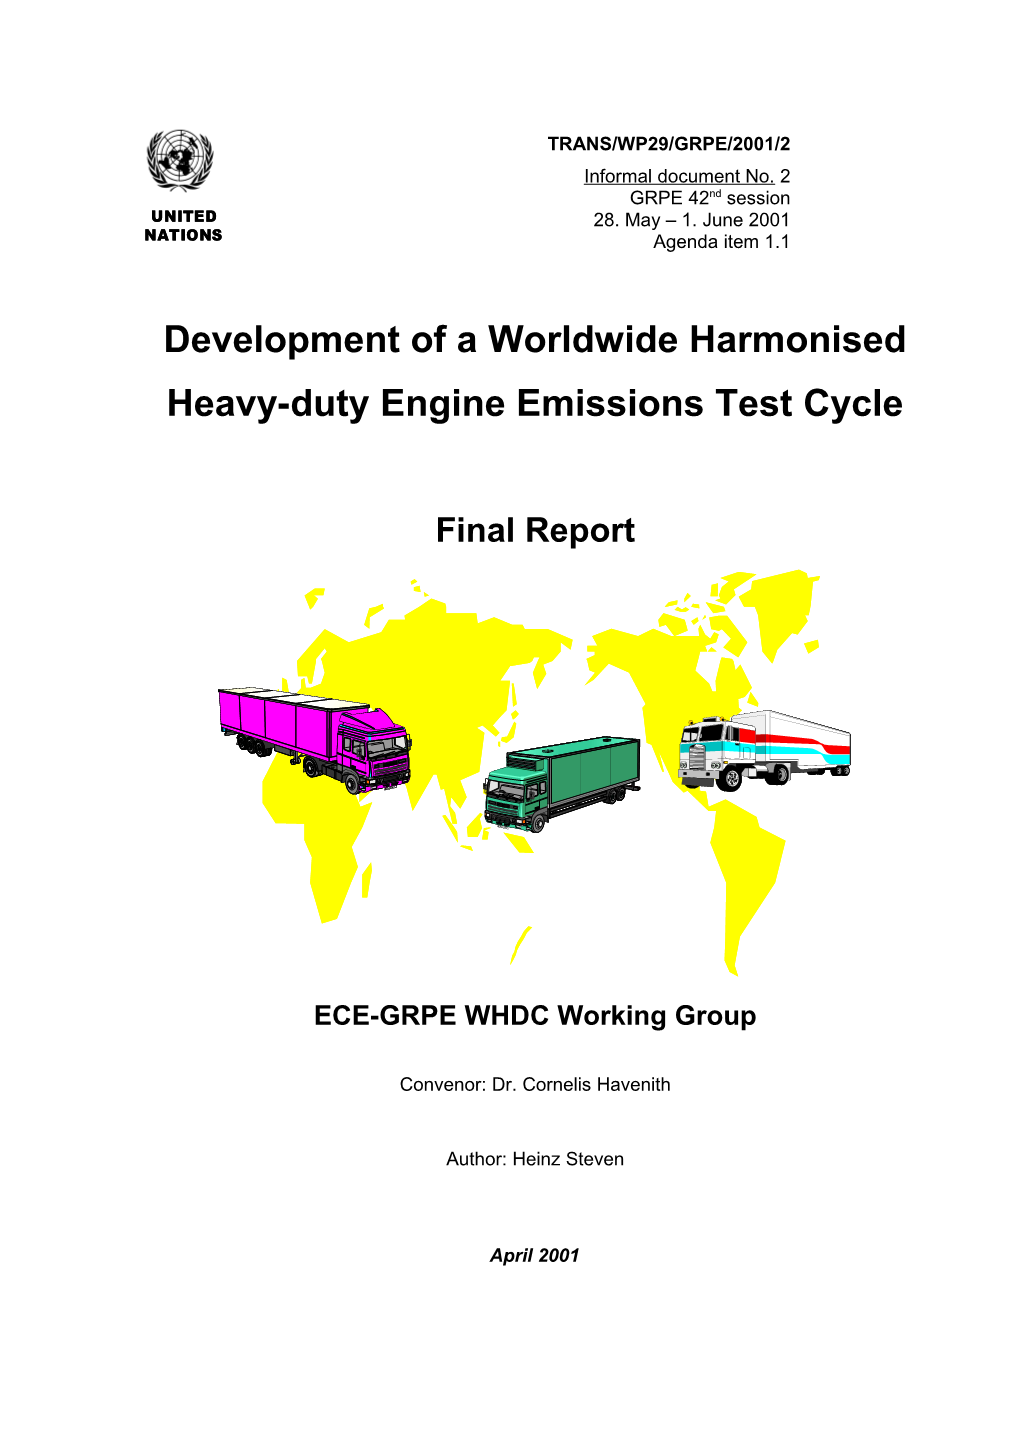 Development of WHDC, Summary Report